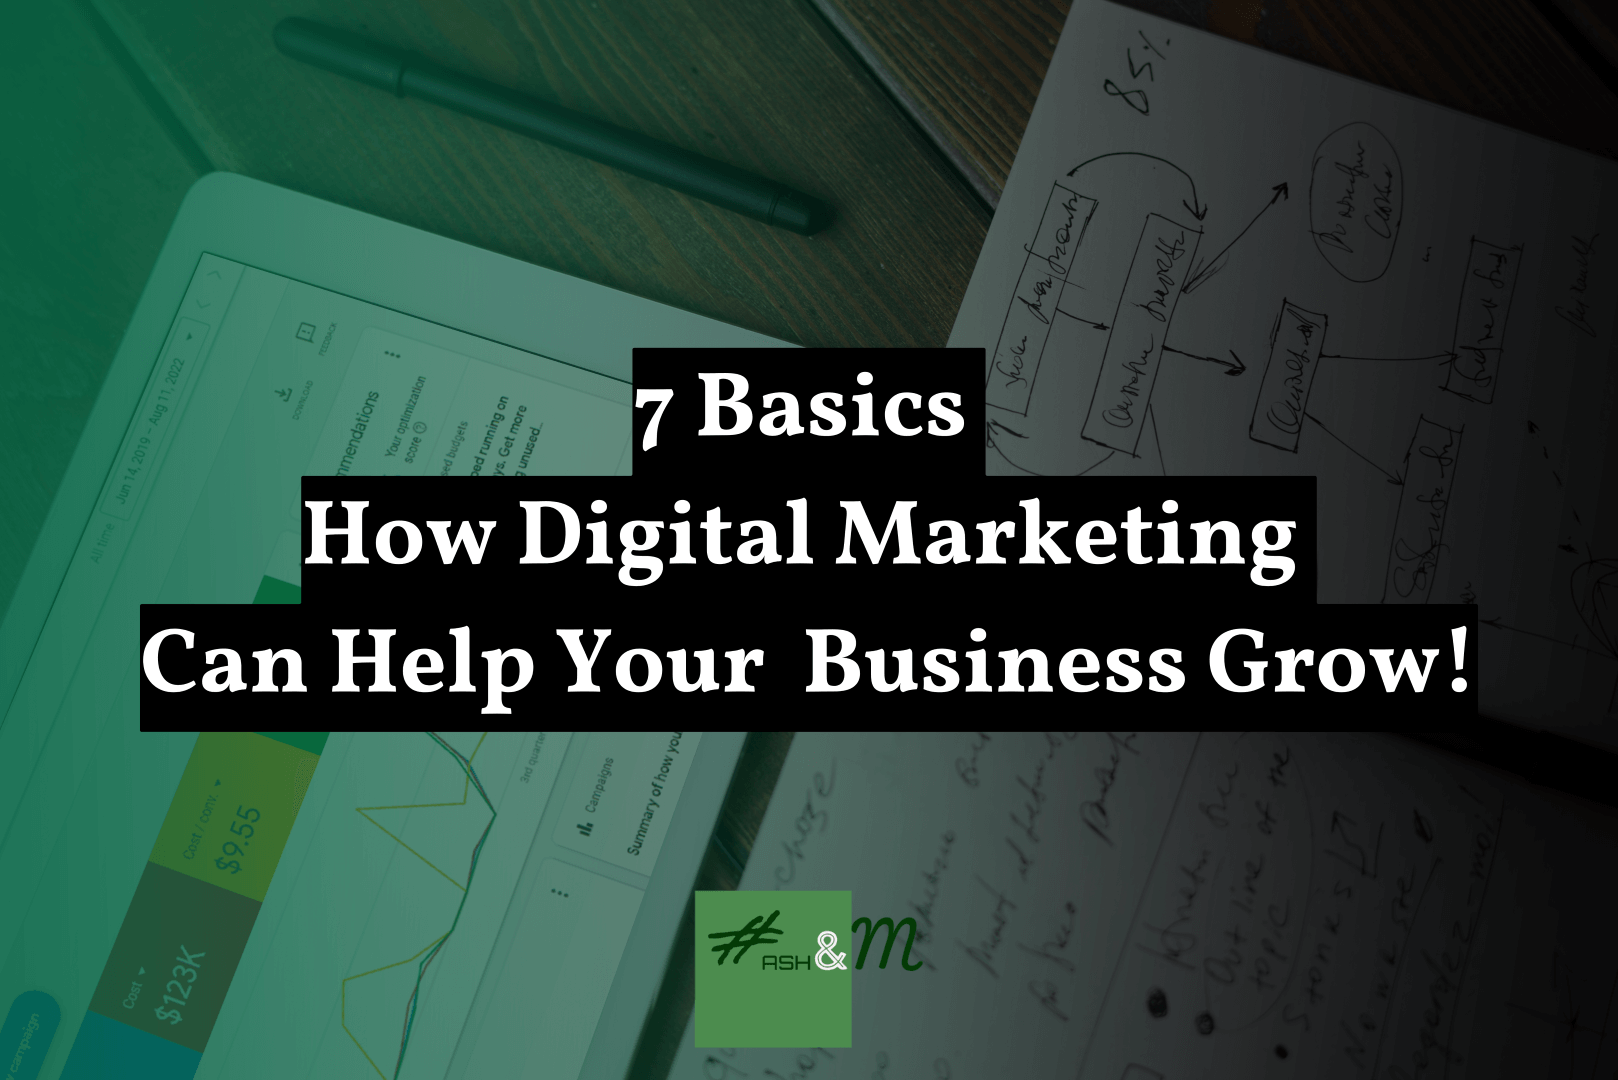 Blog: 7 Basics How Digital Marketing Can Help Your Business Grow!